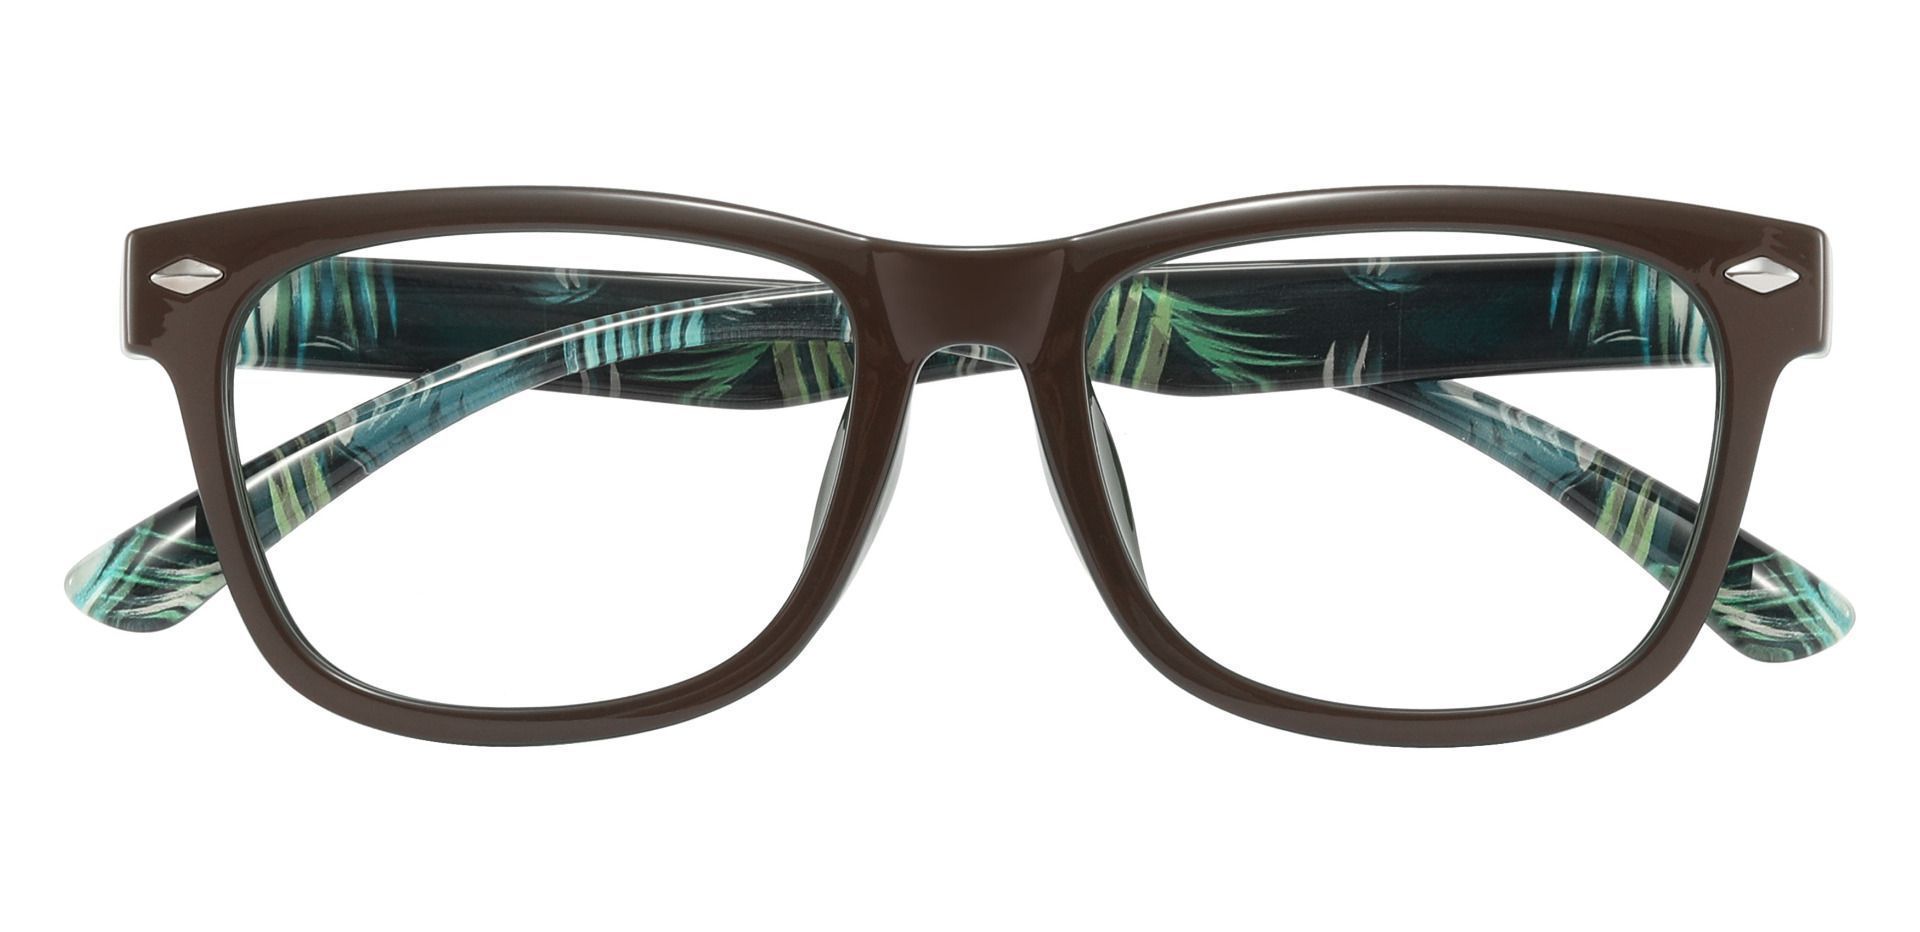 Shaler Square Progressive Glasses - Brown